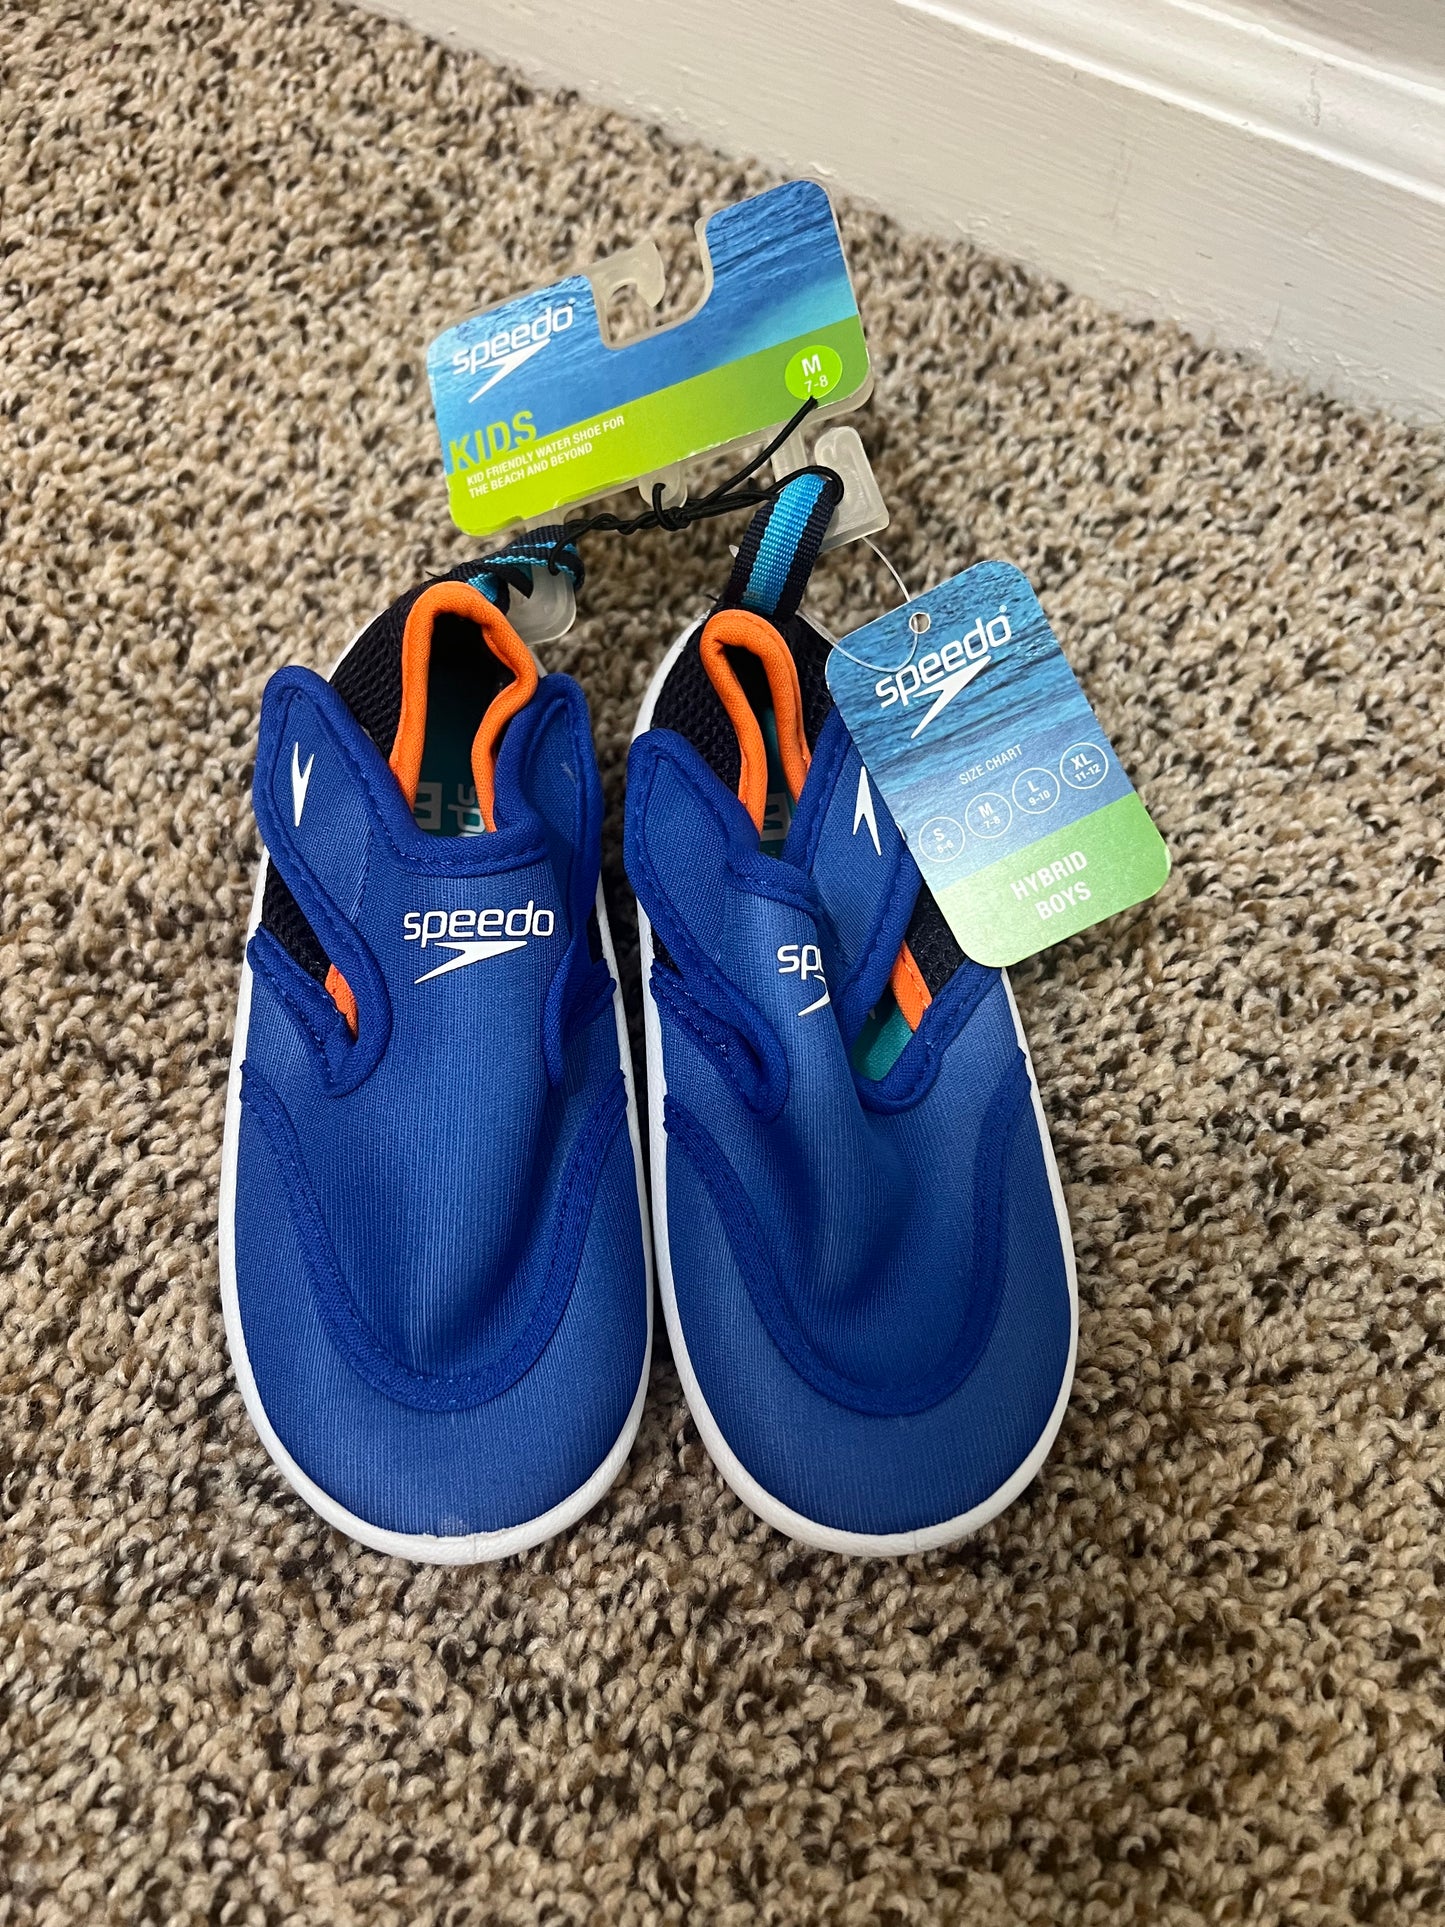 Boys M (7/8) Speedo Blue/orange hybrid water shoe - NWT